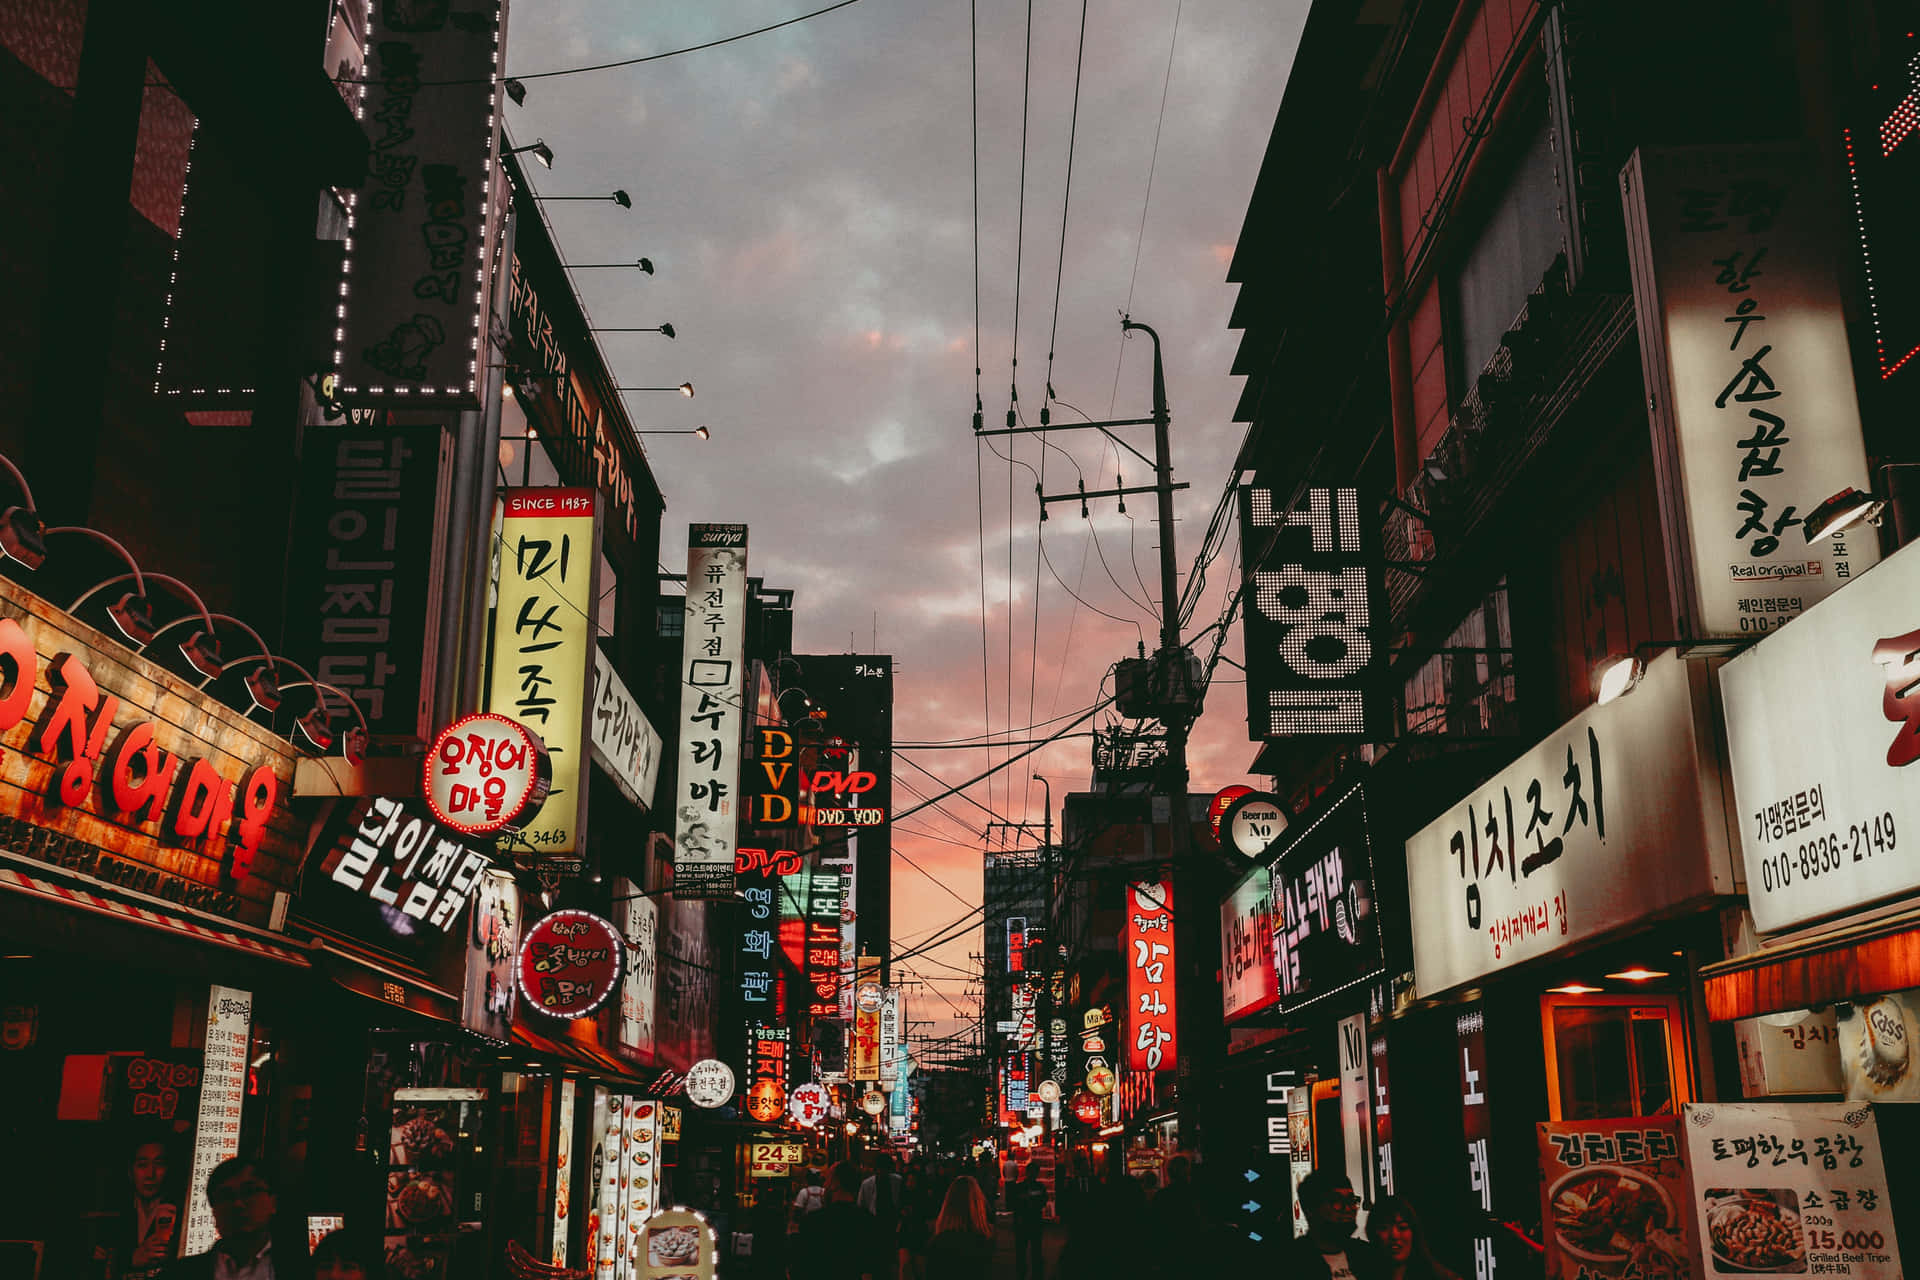 Street scape of Seoul, South Korea